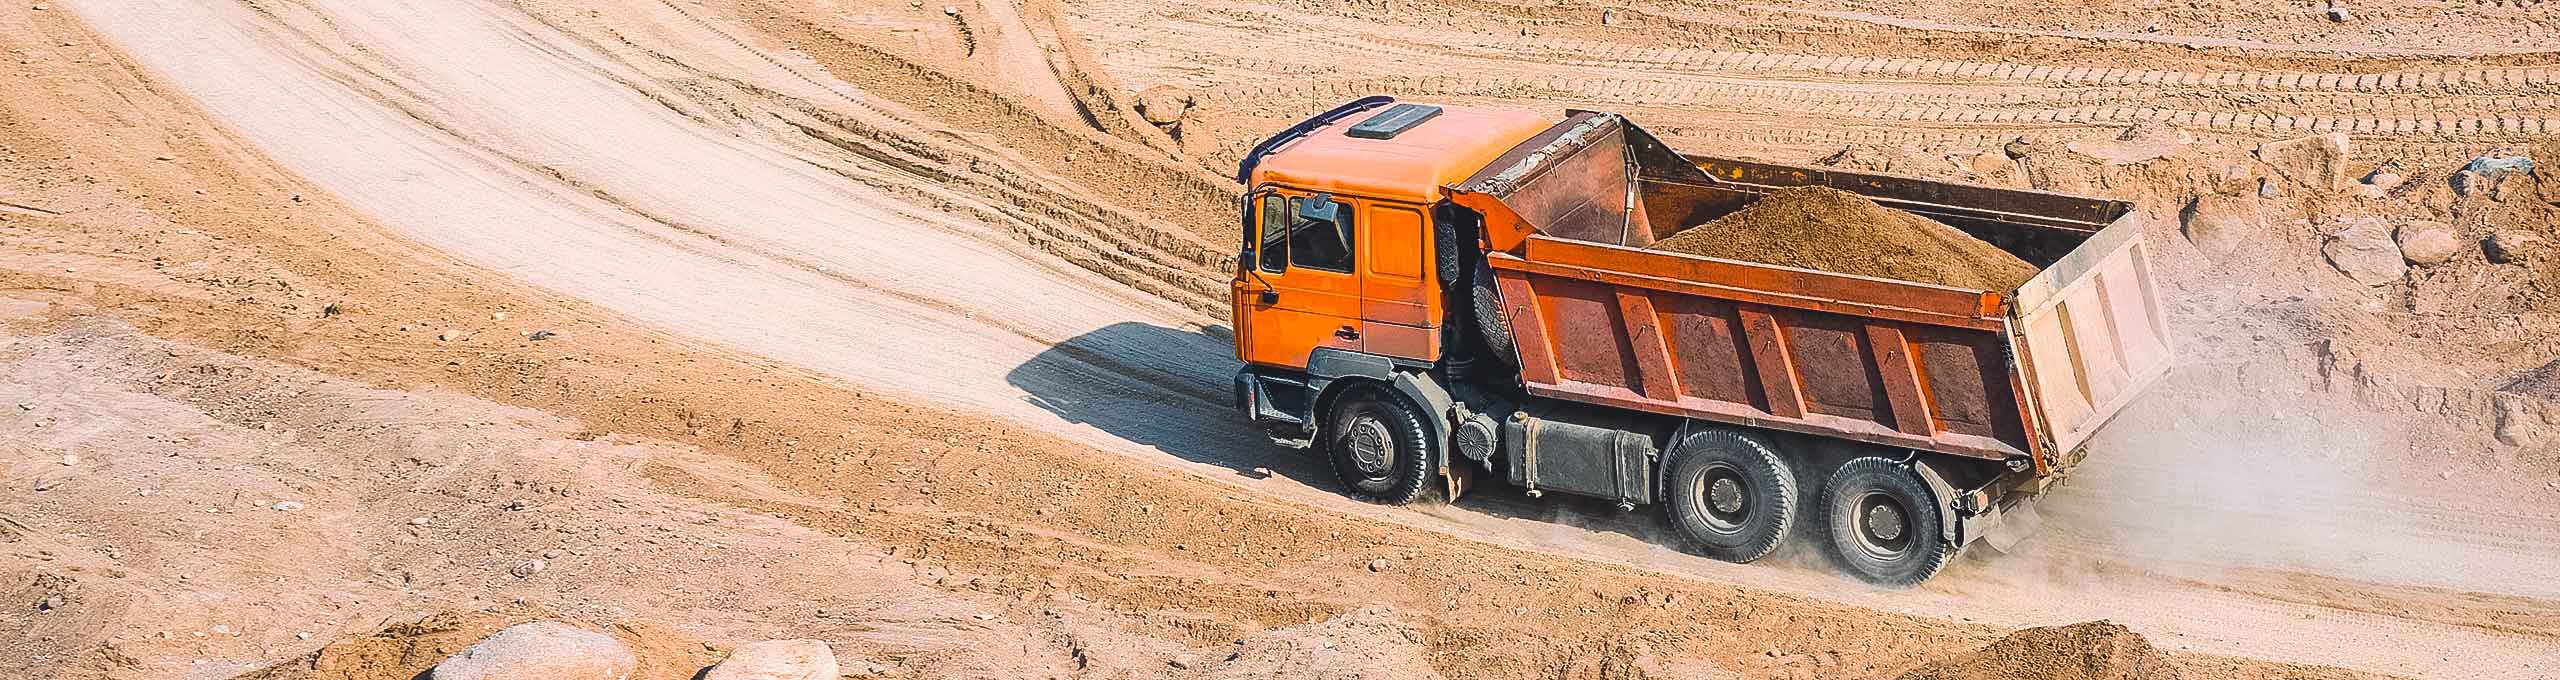 An orange dump truck full of dirt driving down a dirt road.